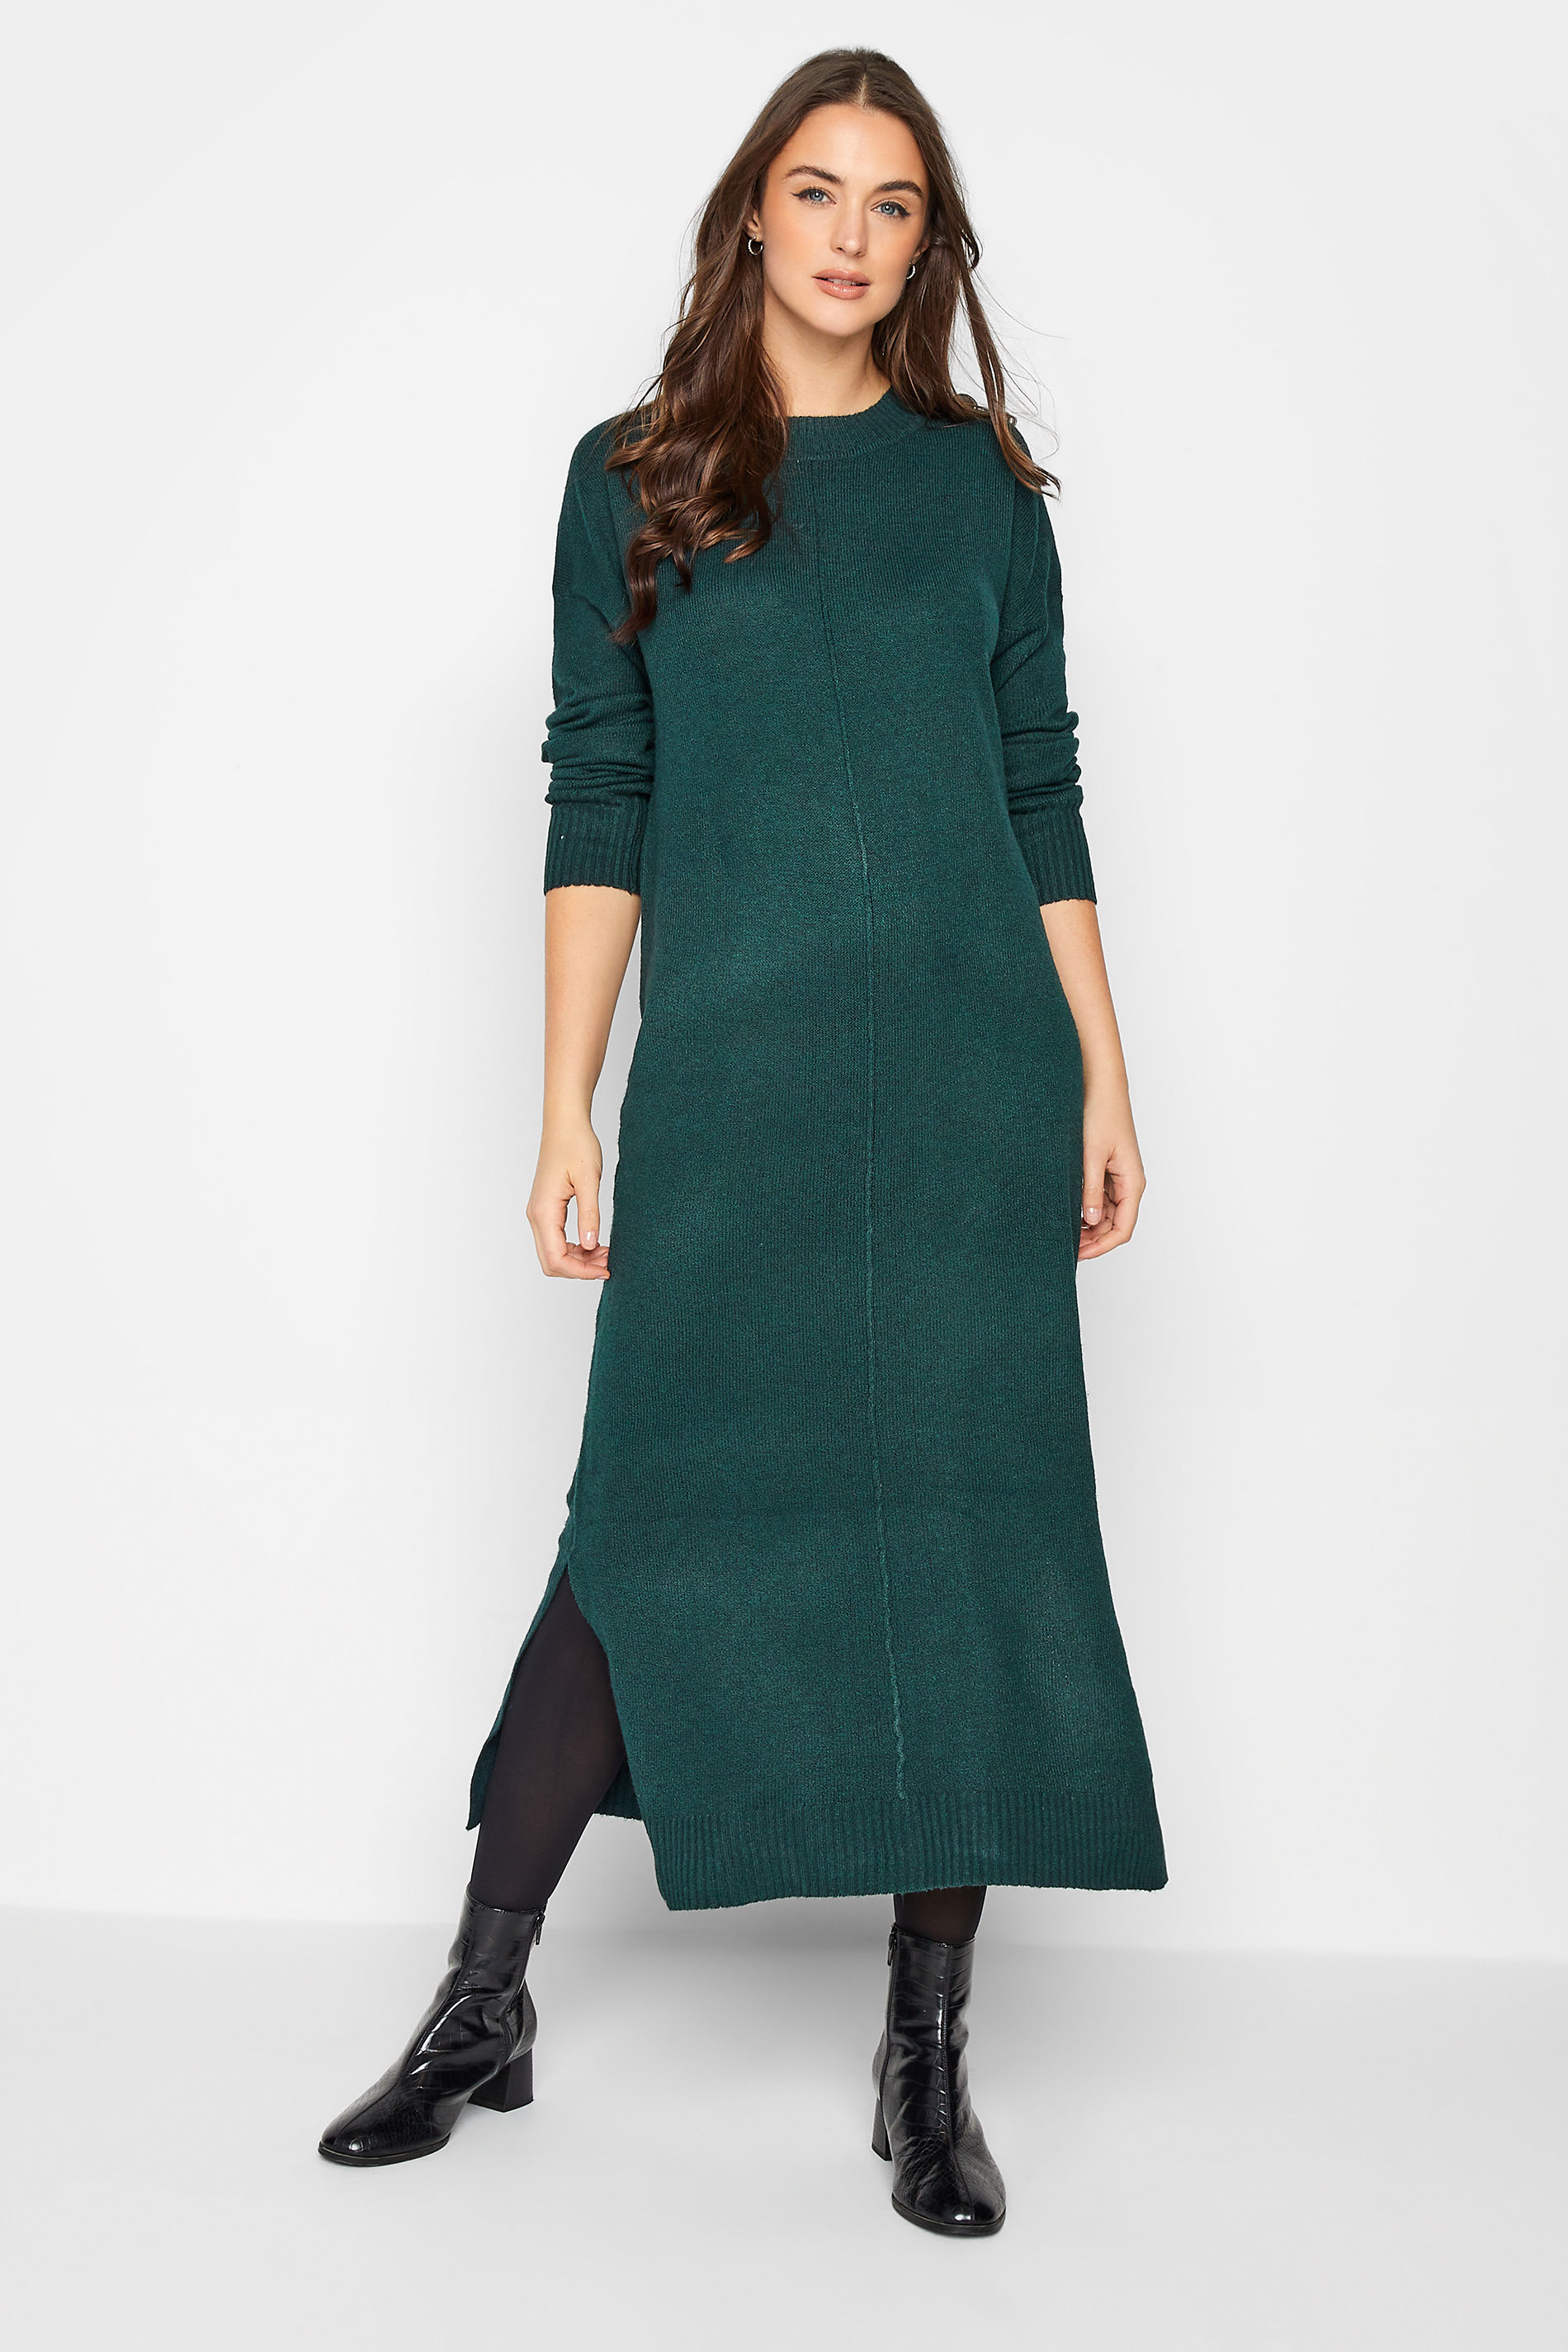 Tall Women's Green Knitted Midi Dress | Long Tall Sally  2